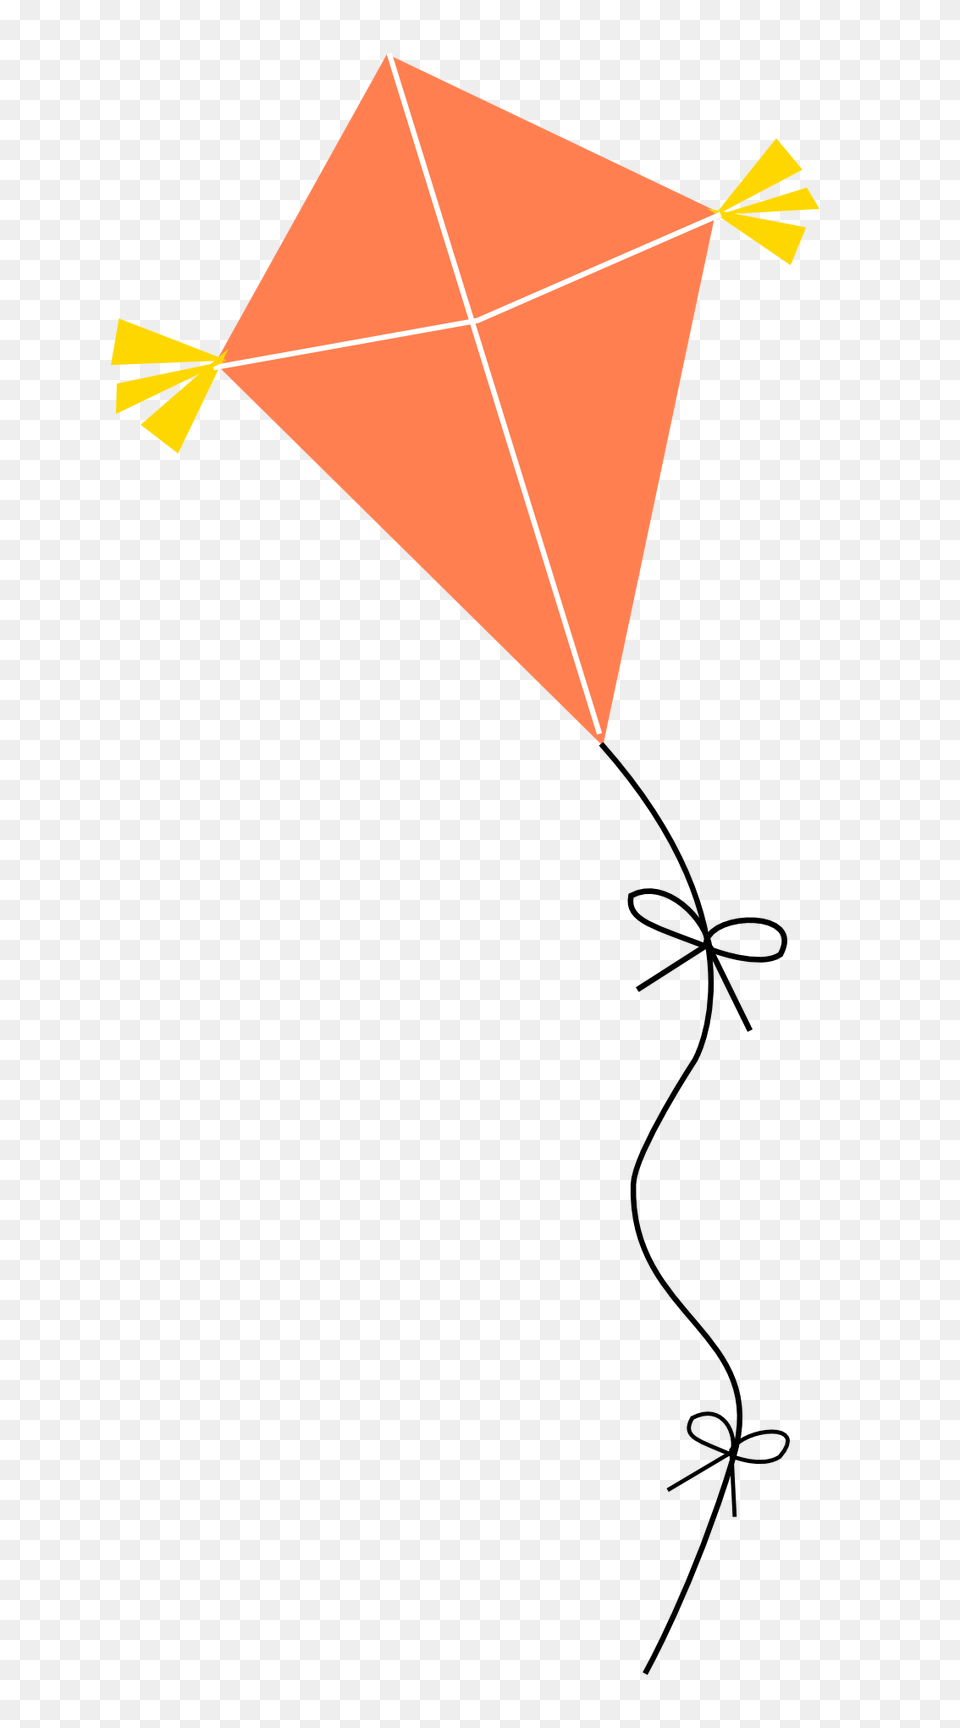 Pngpix Com Kite Toy Free Transparent Png